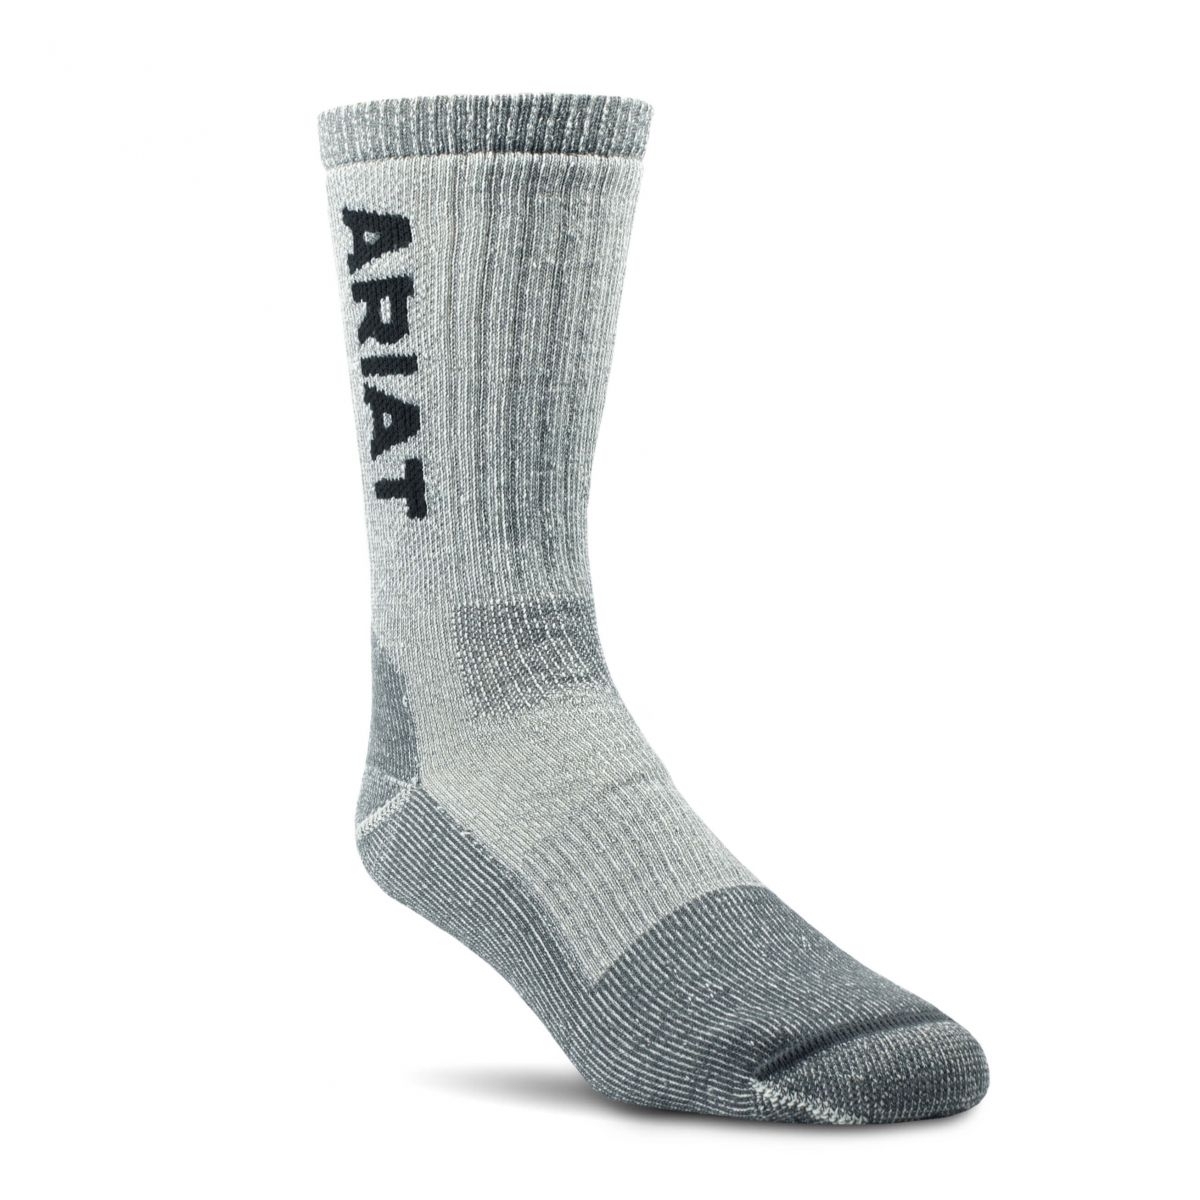 ARIAT Unisex Midweight Merino Wool Blend Steel Toe Work Socks Grey - AR2187-050 Grey - Grey, Medium